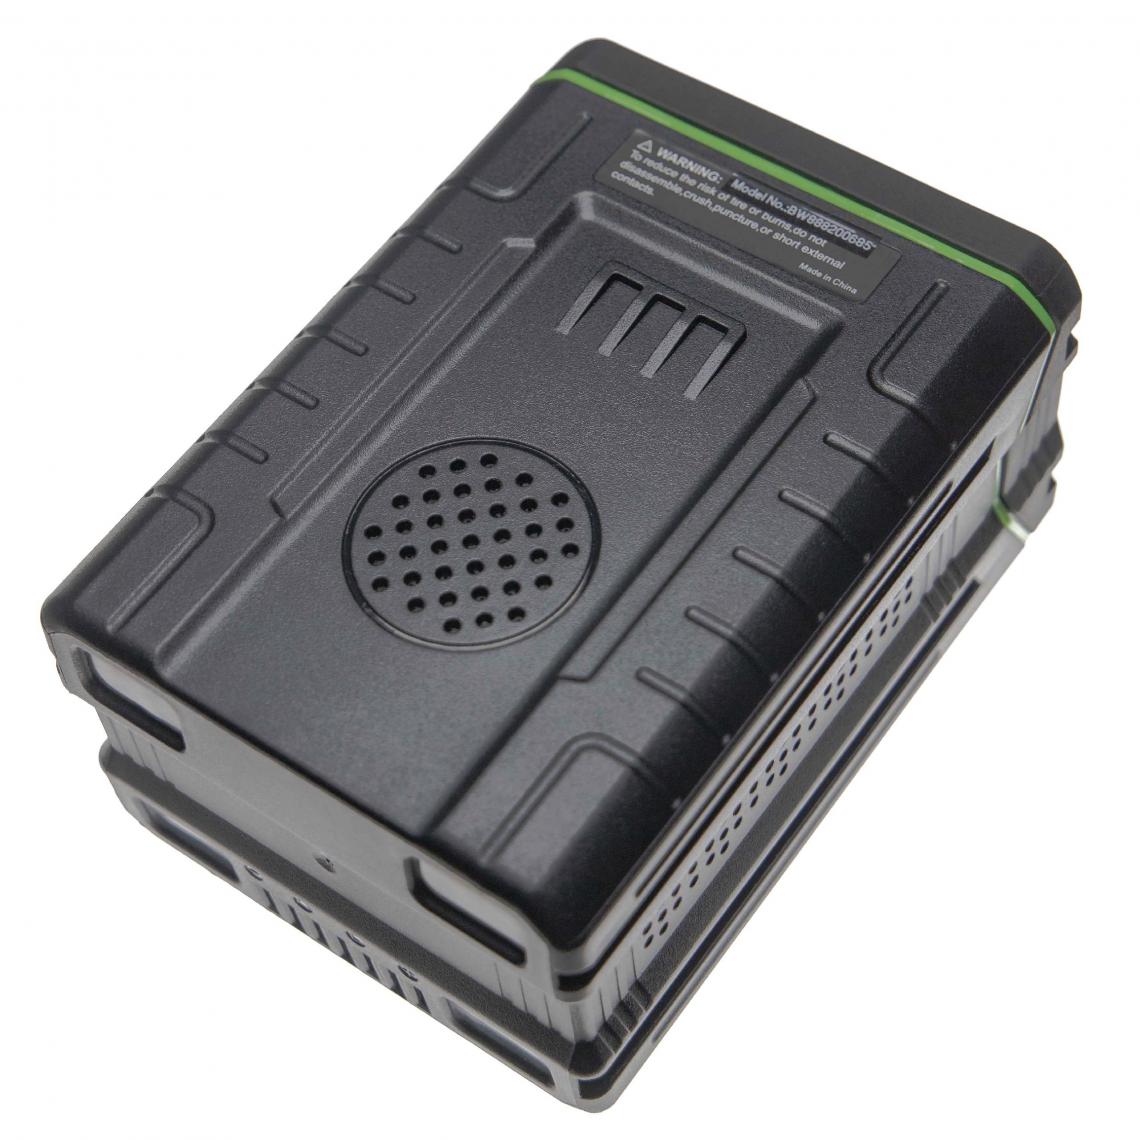 Vhbw - vhbw Batterie compatible avec Stiga Combi 43 AE, Combi 43 S AE, Combi 48 AE, Combi 48 S AE, Combi 50 S AE outil électrique (2000mAh Li-ion 80V) - Accessoires vissage, perçage